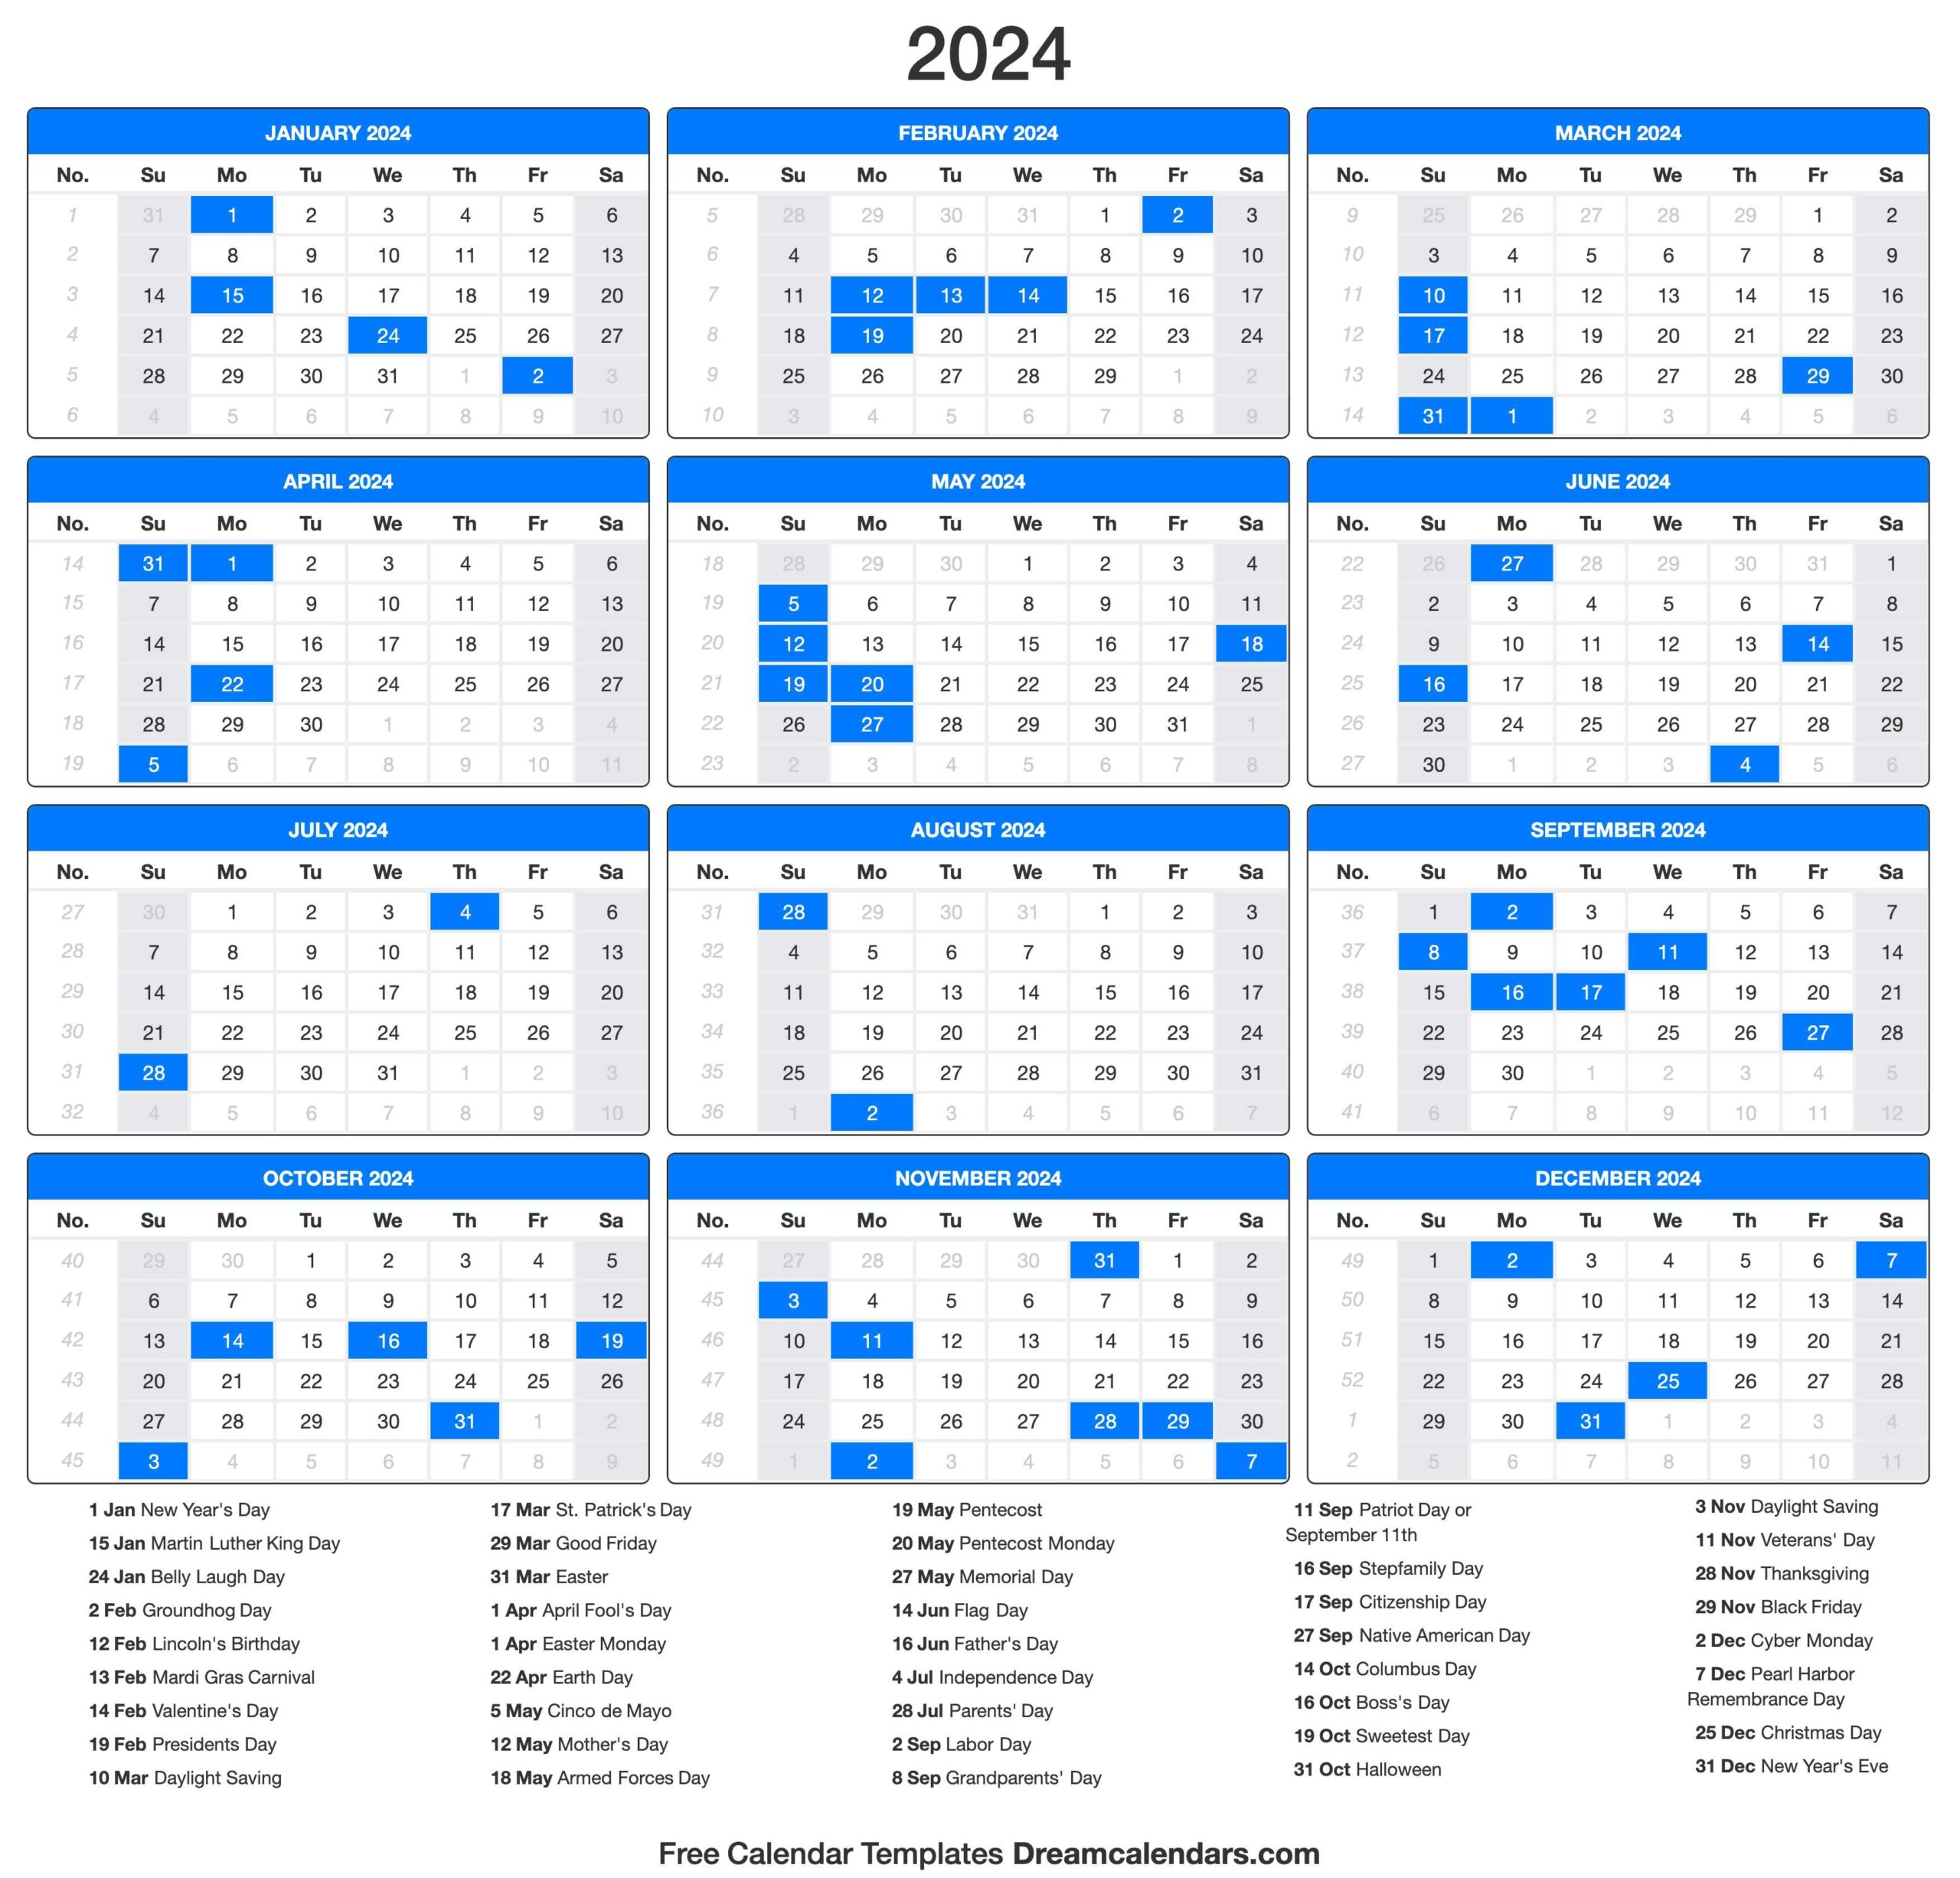 2024 Calendar - Free Printable 2024 5x7 Calendar